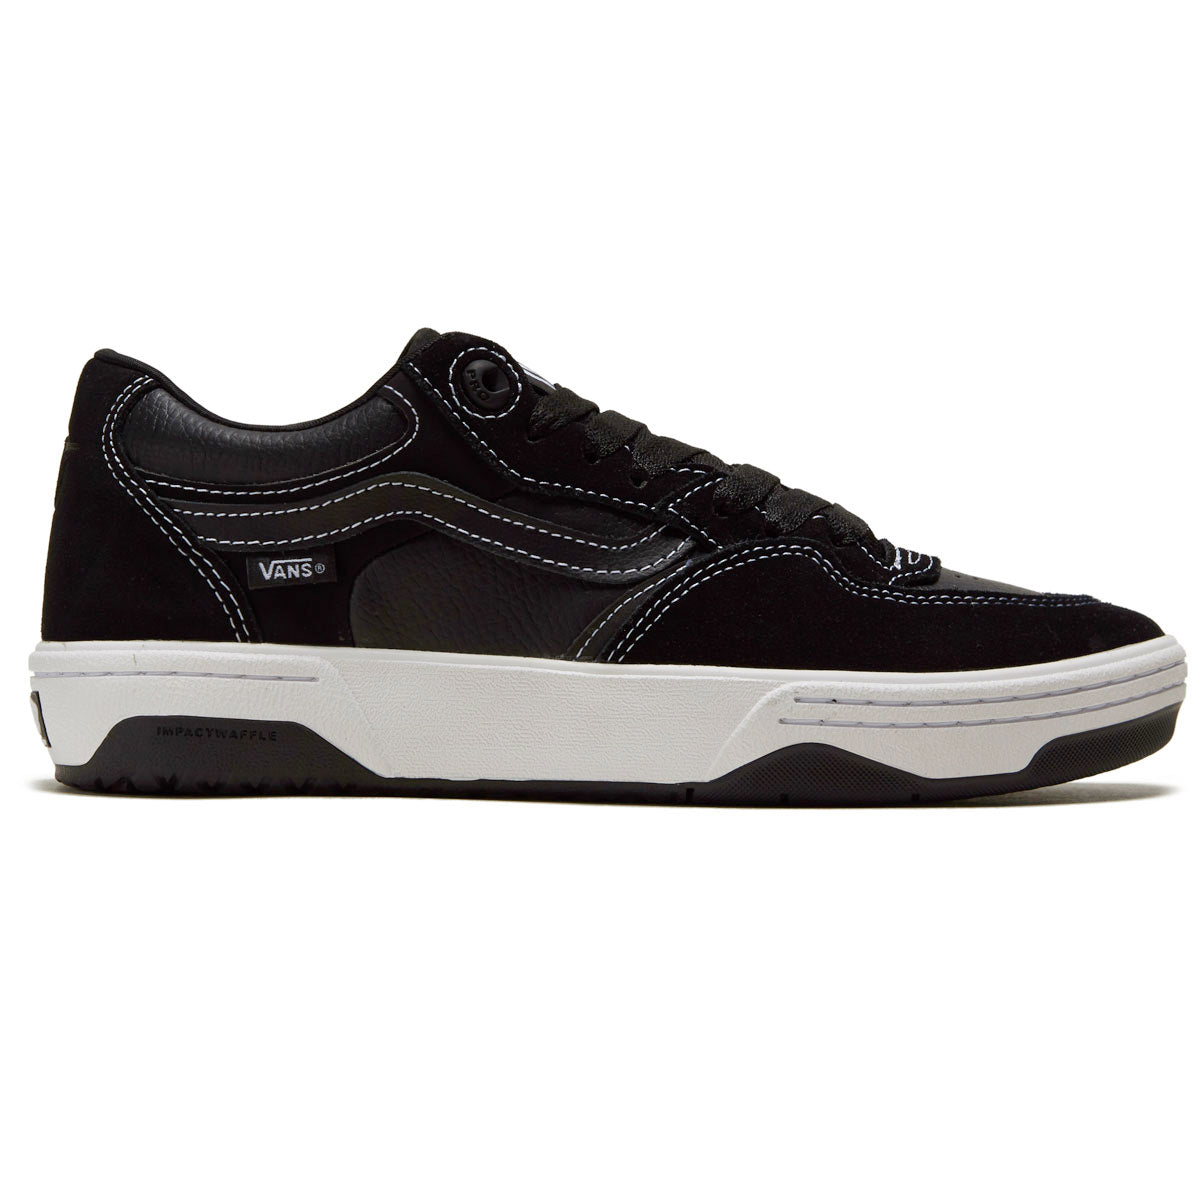 Vans Rowan 2 Shoes - Black/White image 1